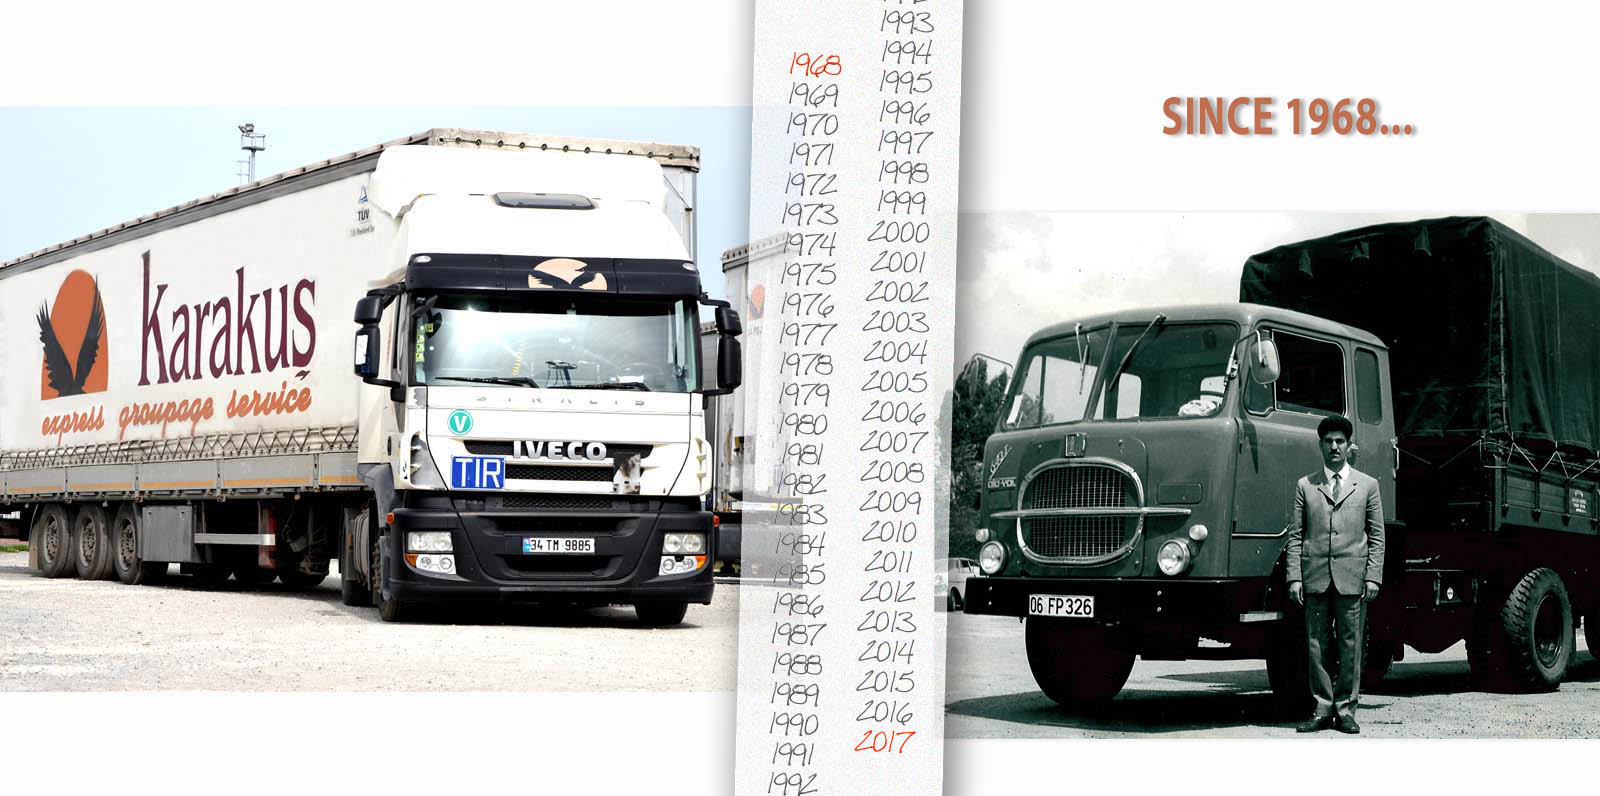 5 Days Of The Week Groupage Shipments, Partial Shipment, Partial Transport, Balkan, Little Truck Shipment, Turkey, Istanbul, Logistics, Transportation, Full Truck 